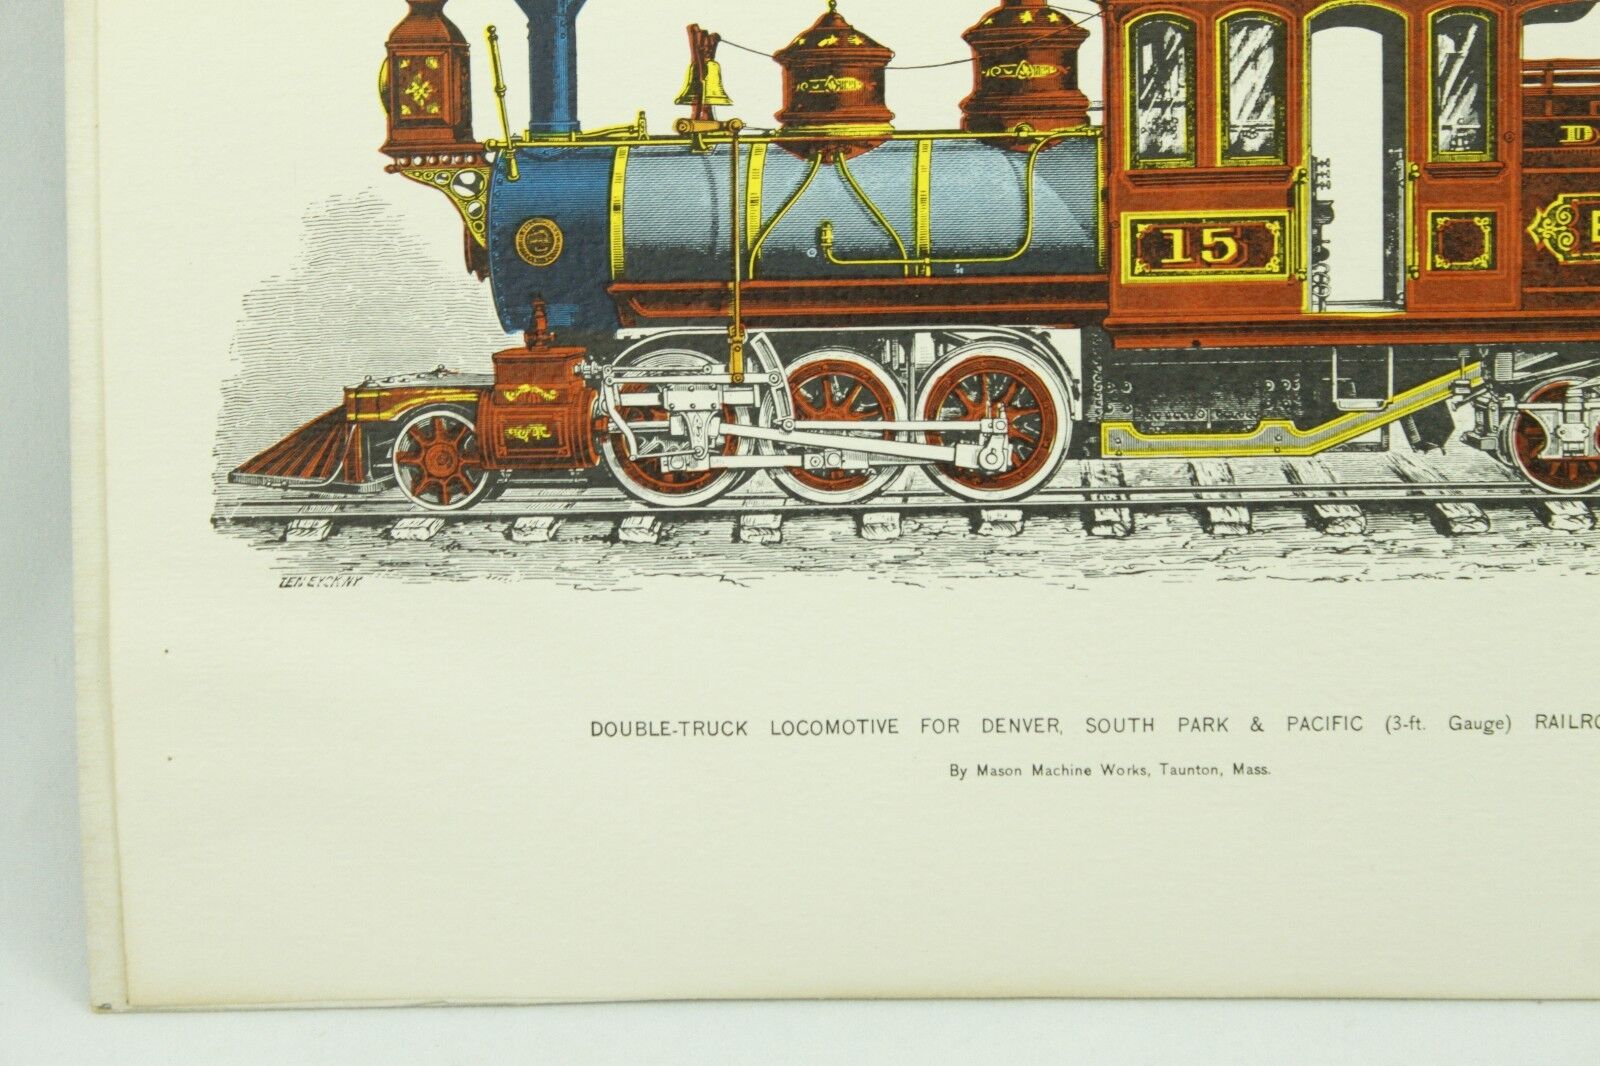 Vintage Train Print Illustrations Forney Double-Truck Locomotive Railroad Lot Без бренда - фотография #11